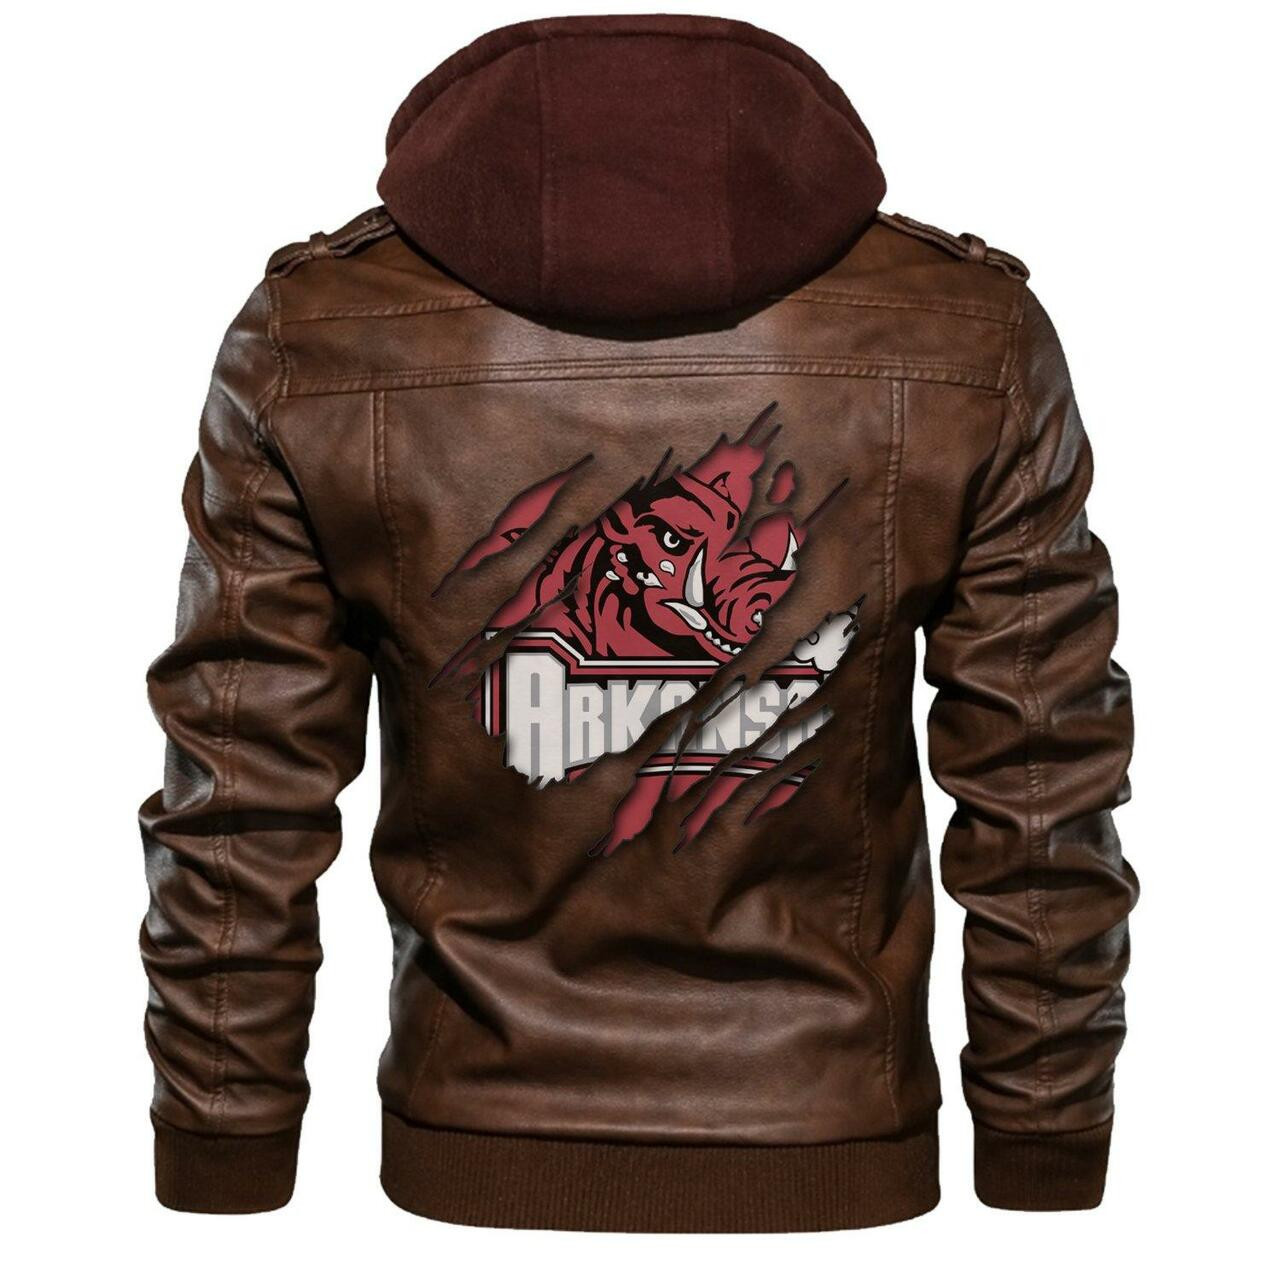 Top leather jacket Sells Best on Techcomshop 80